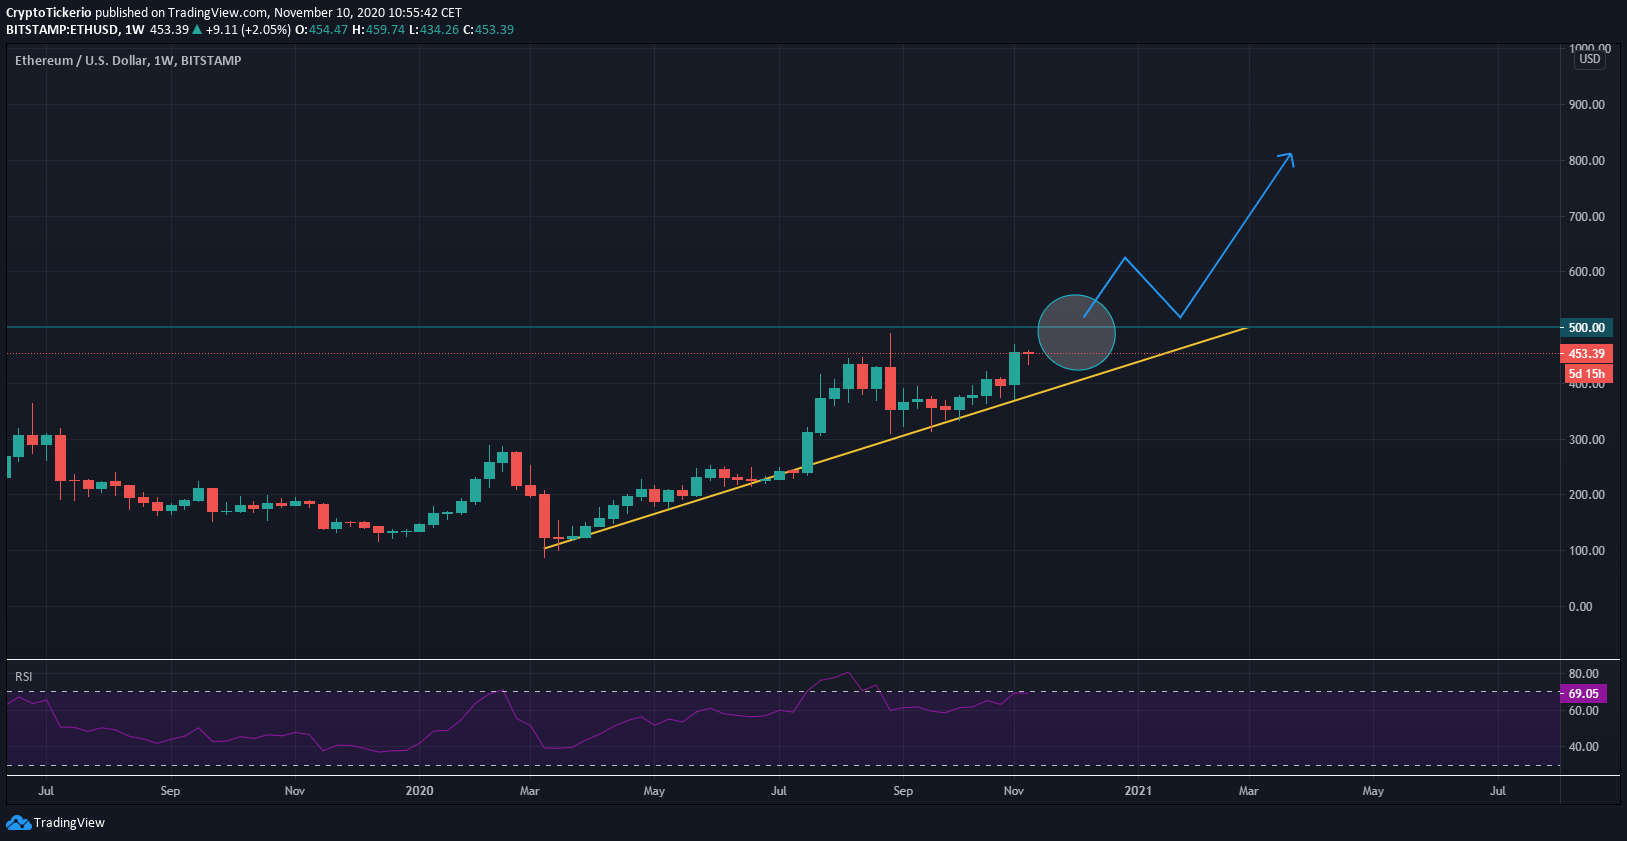 ETH/USD 1 week chart – Scenario 1